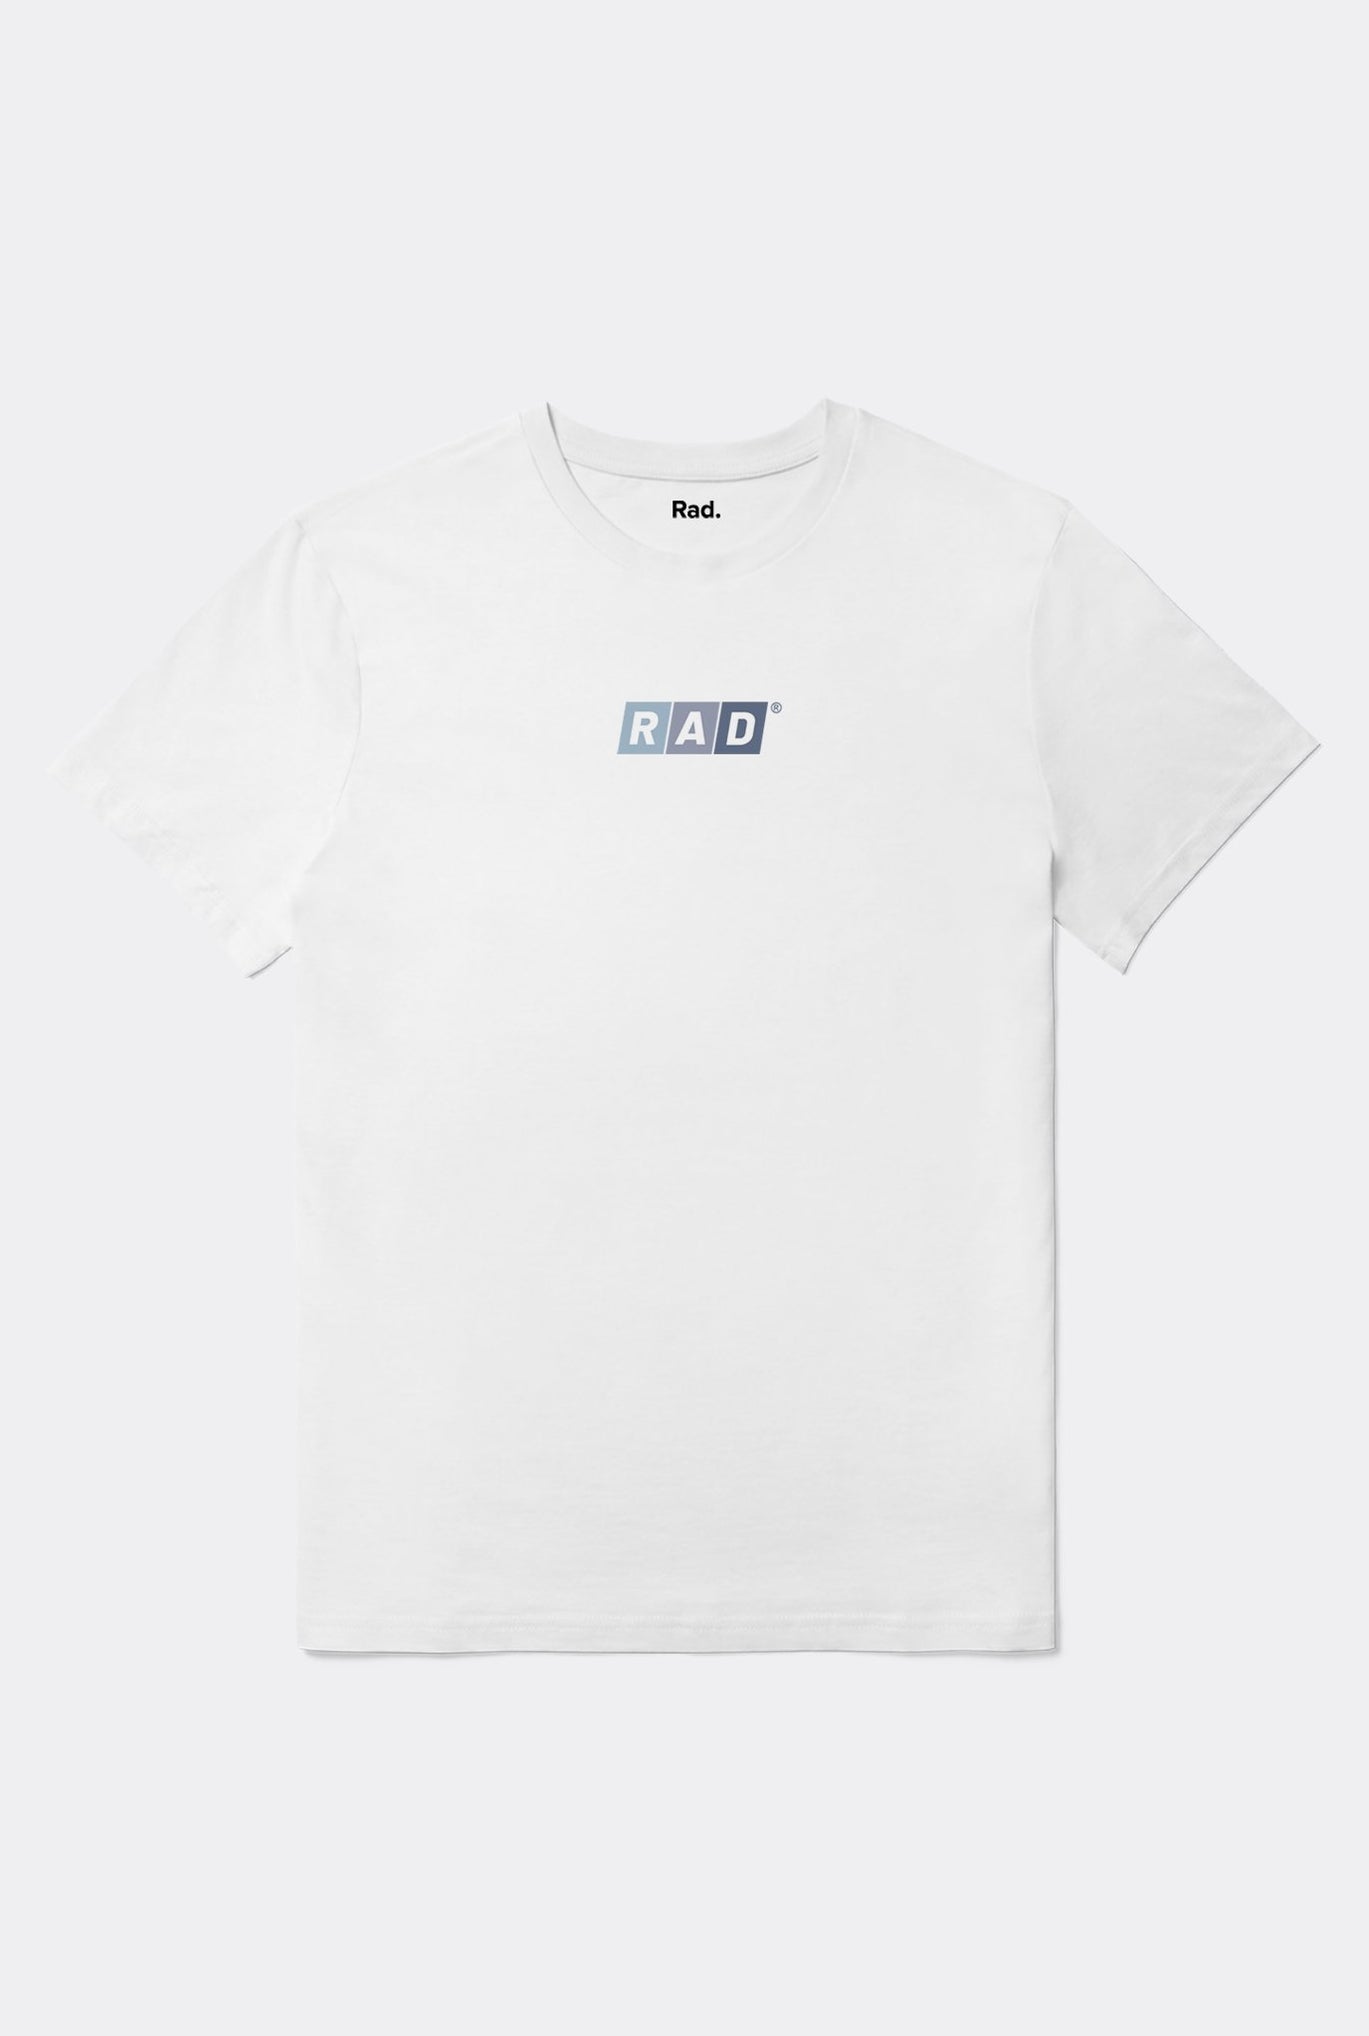 T-Shirt S/S Rad Square Grey